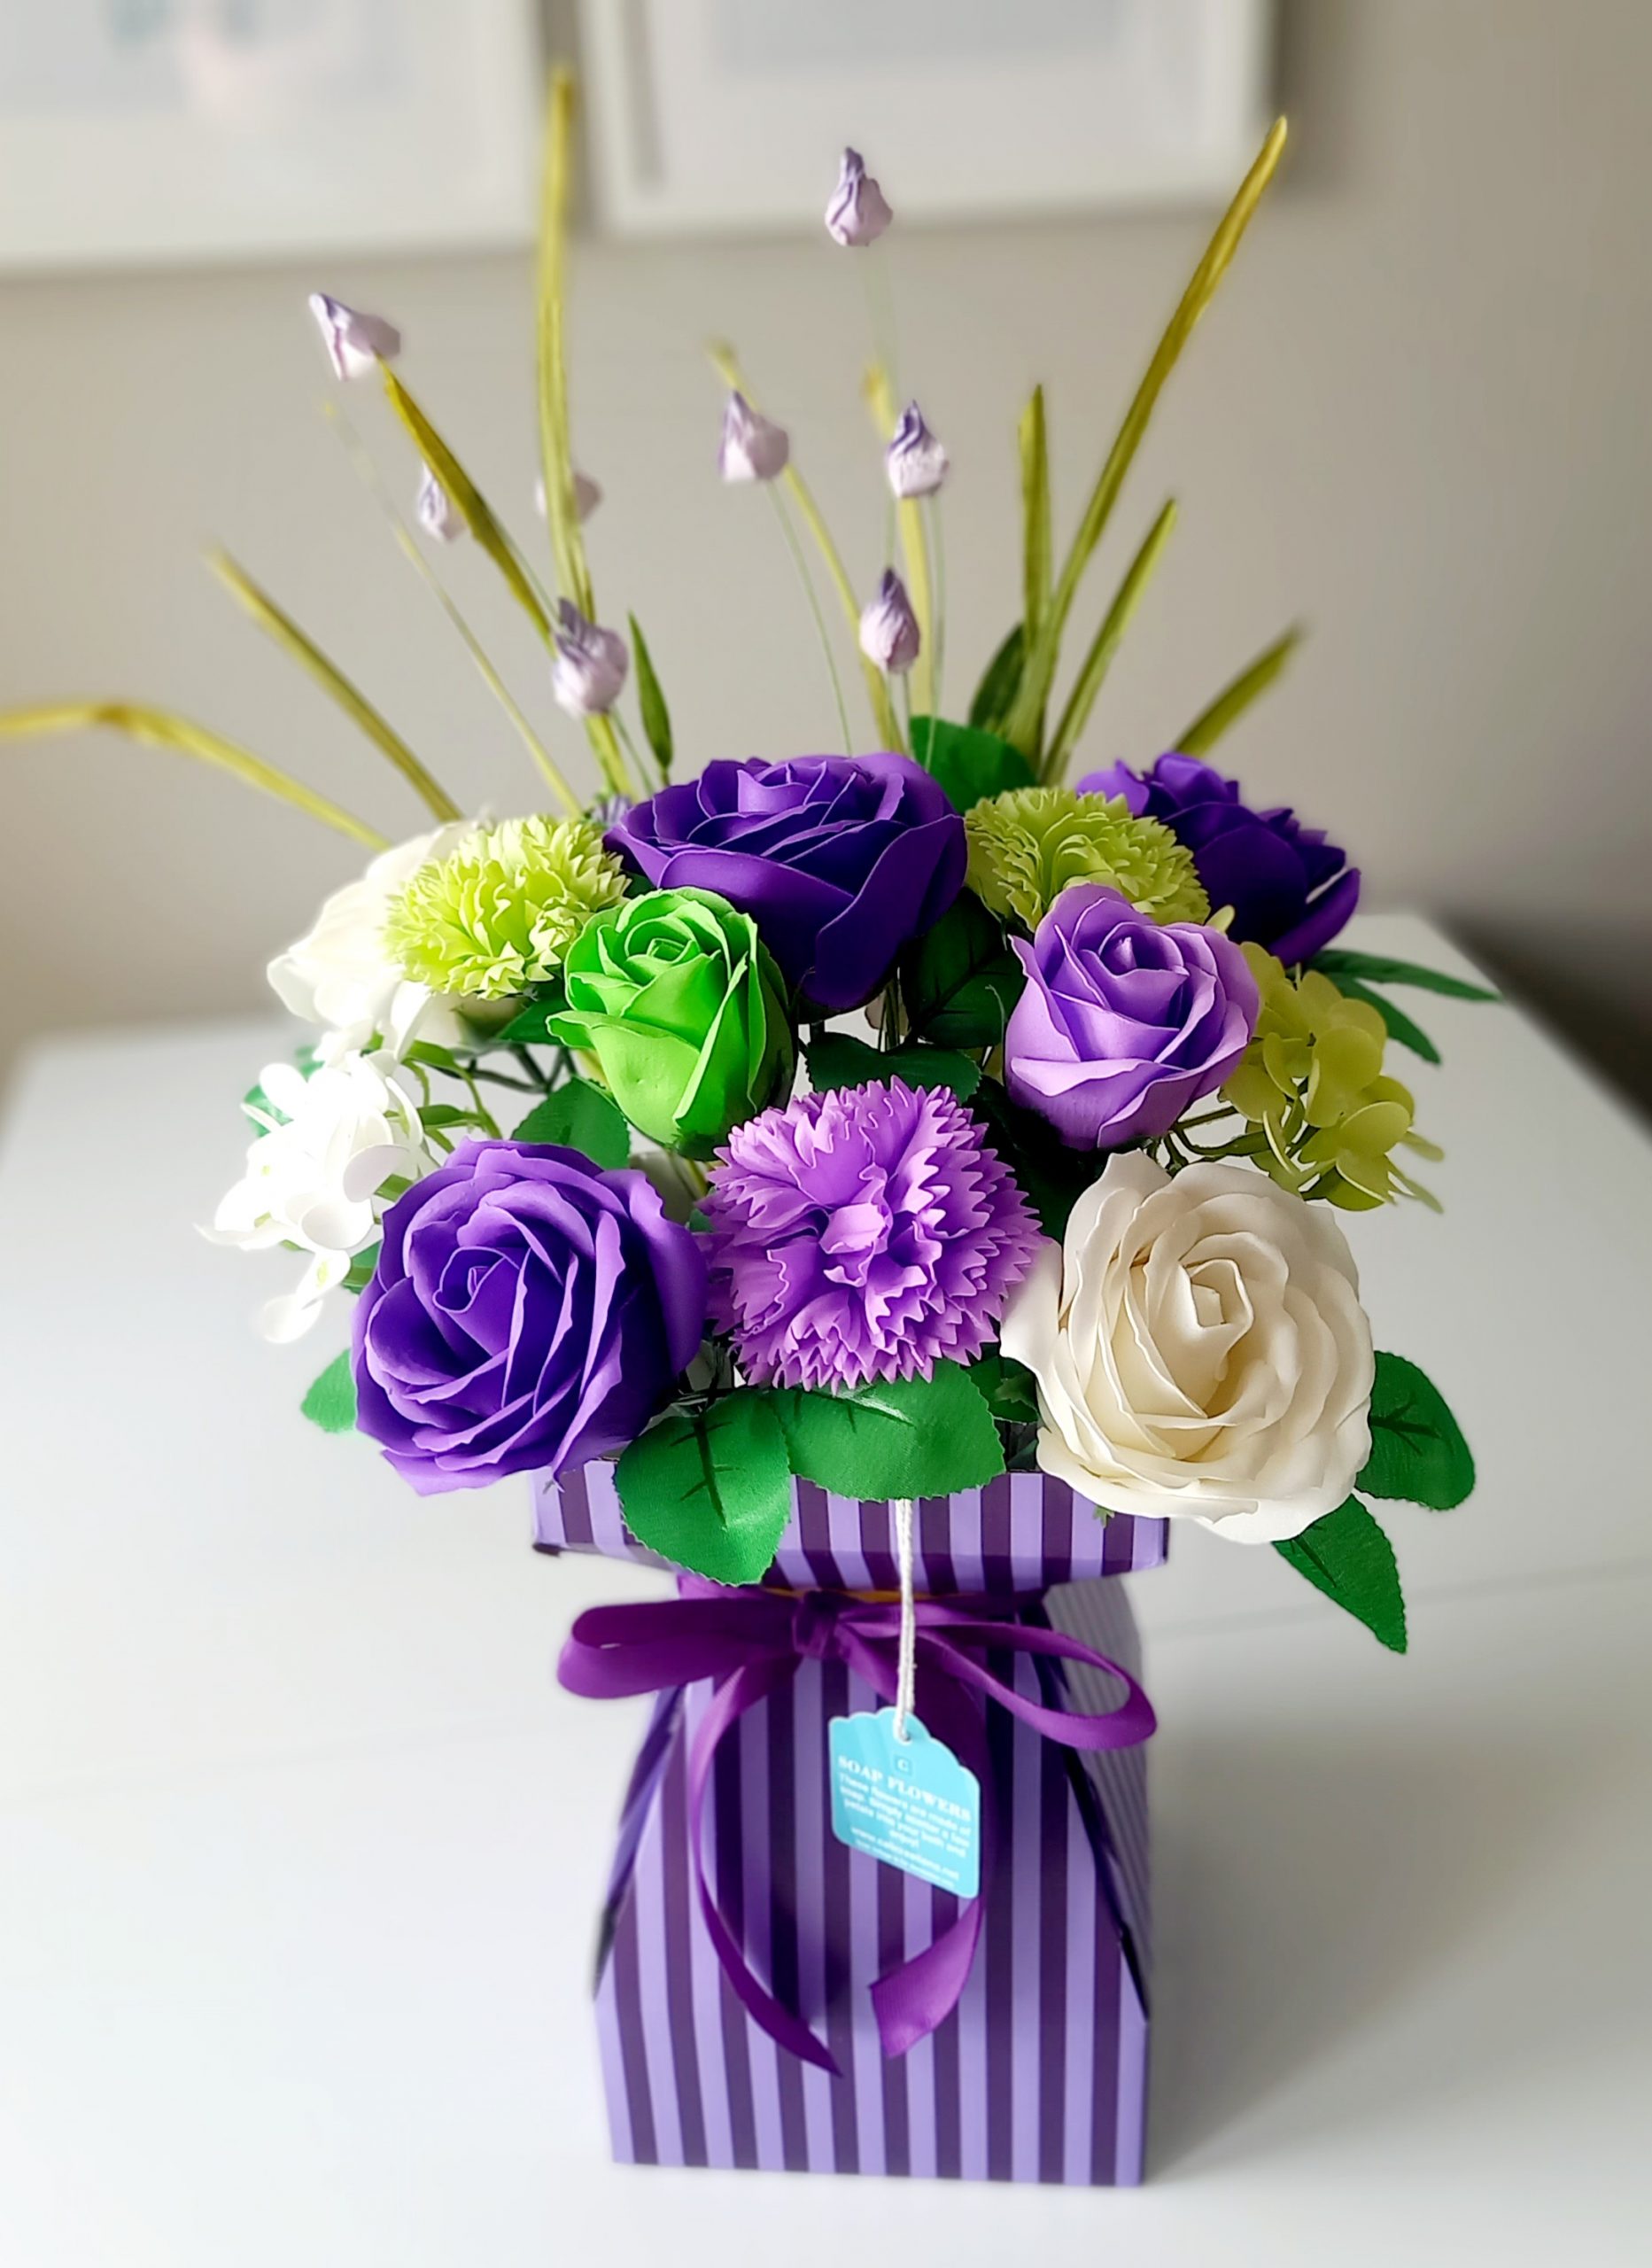 greens and purple transporter vase